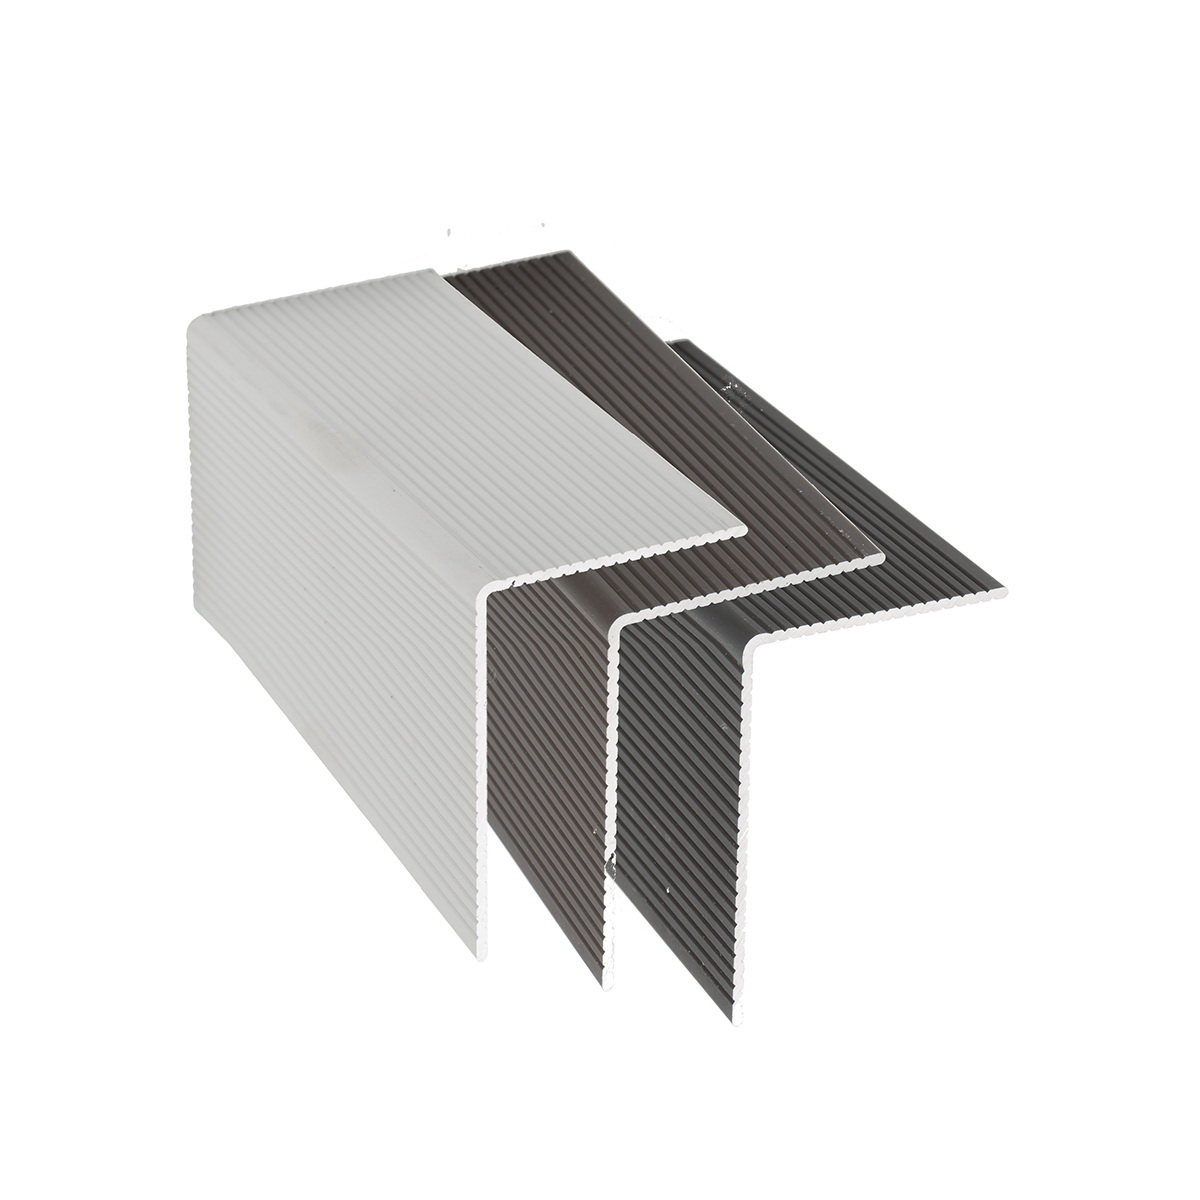 105720-twinson-click-l-abschlusswinkel-aluminium-schwarz-9245-01